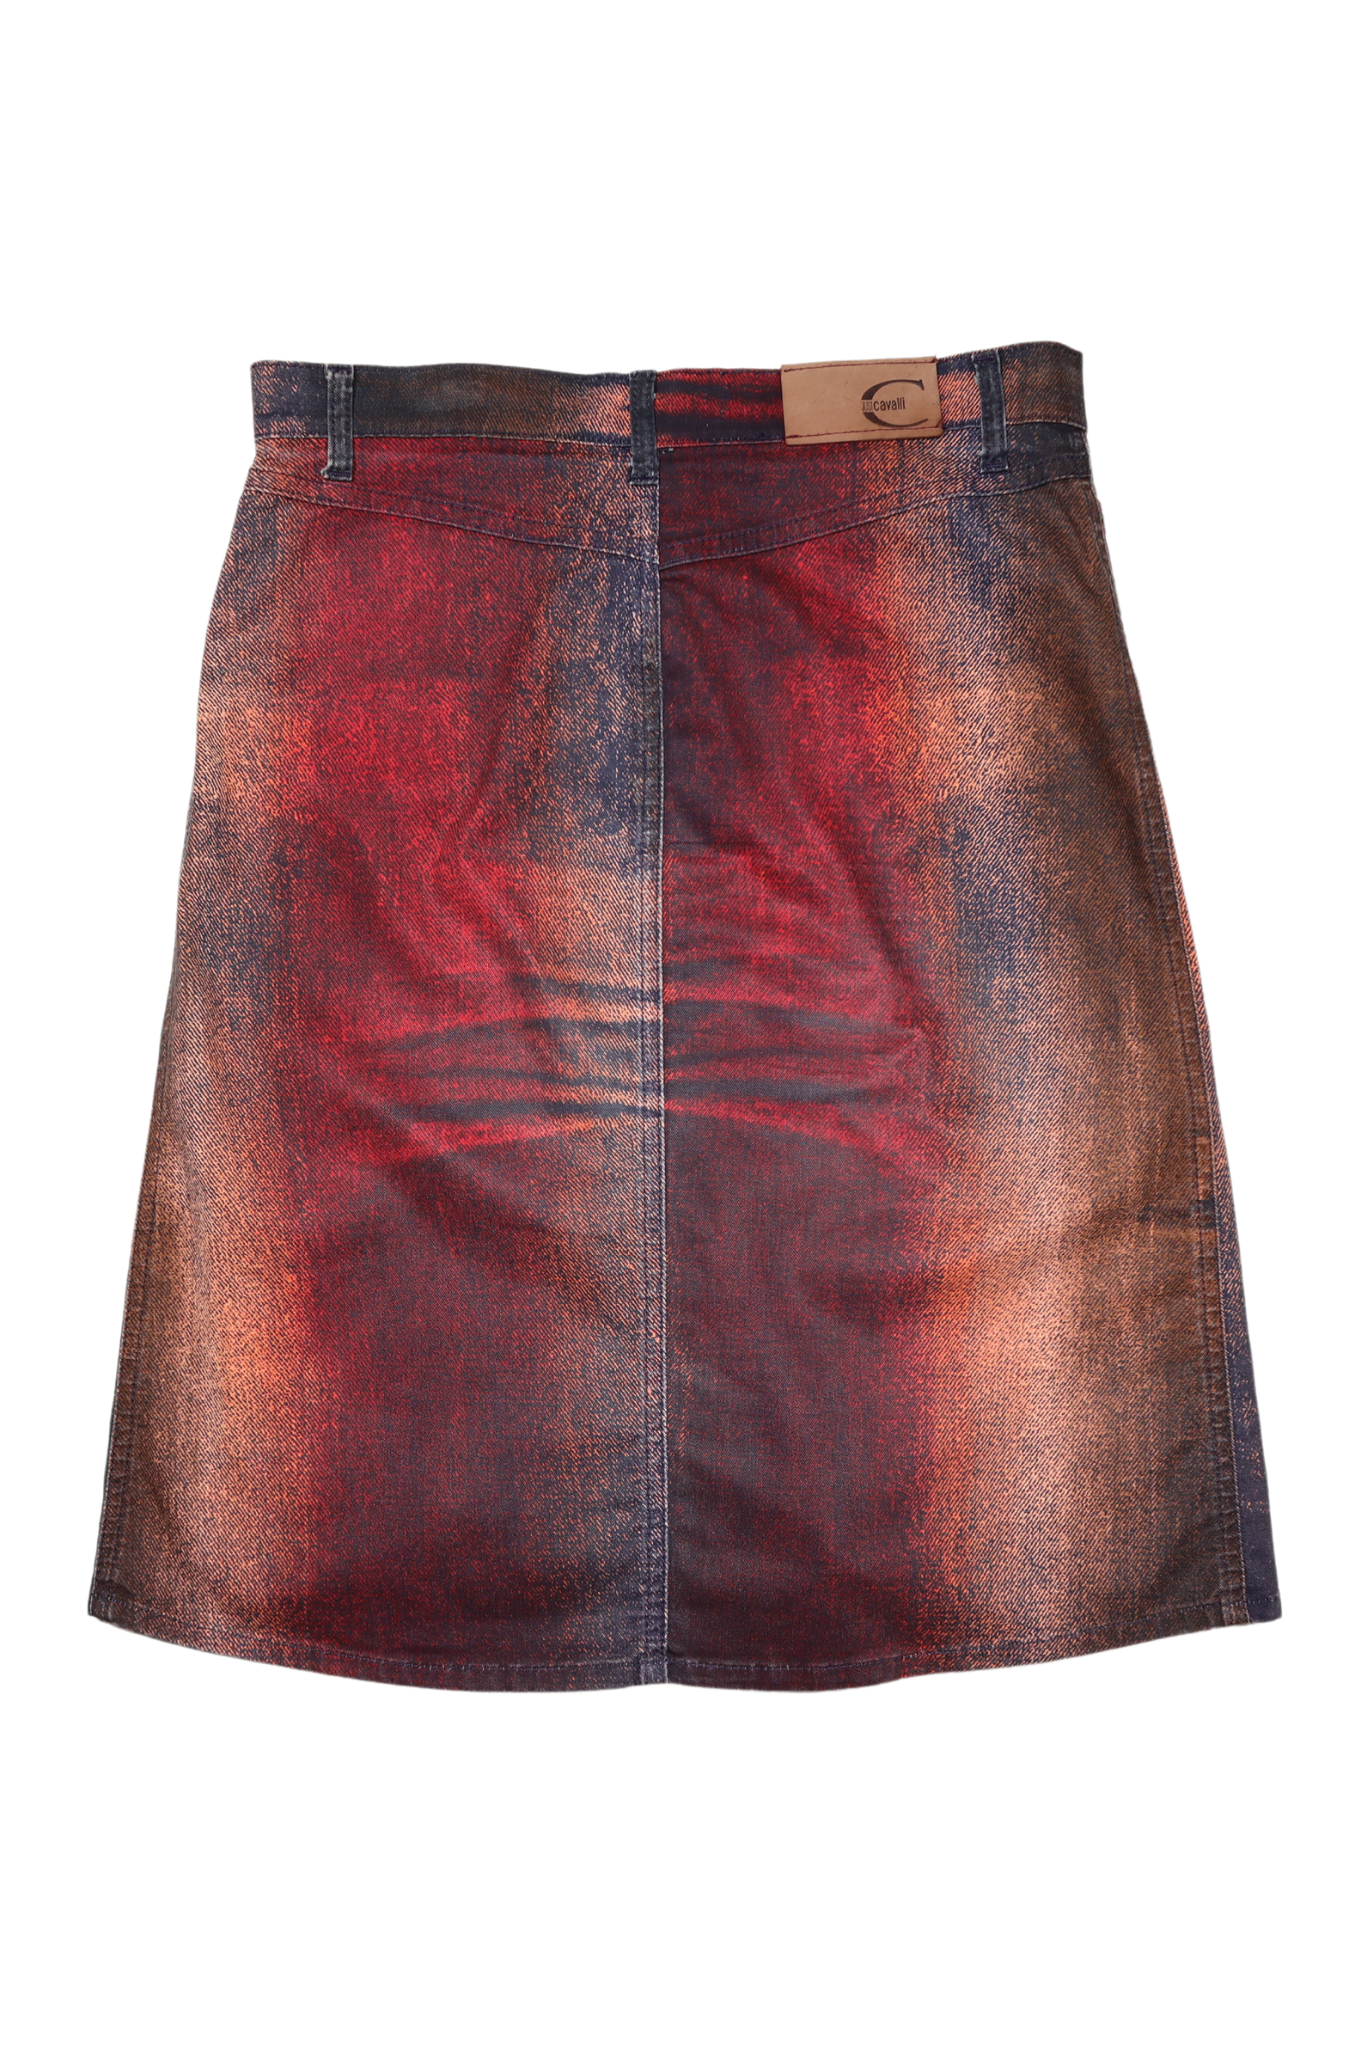 Roberto Cavalli Distress Effect Midi Skirt